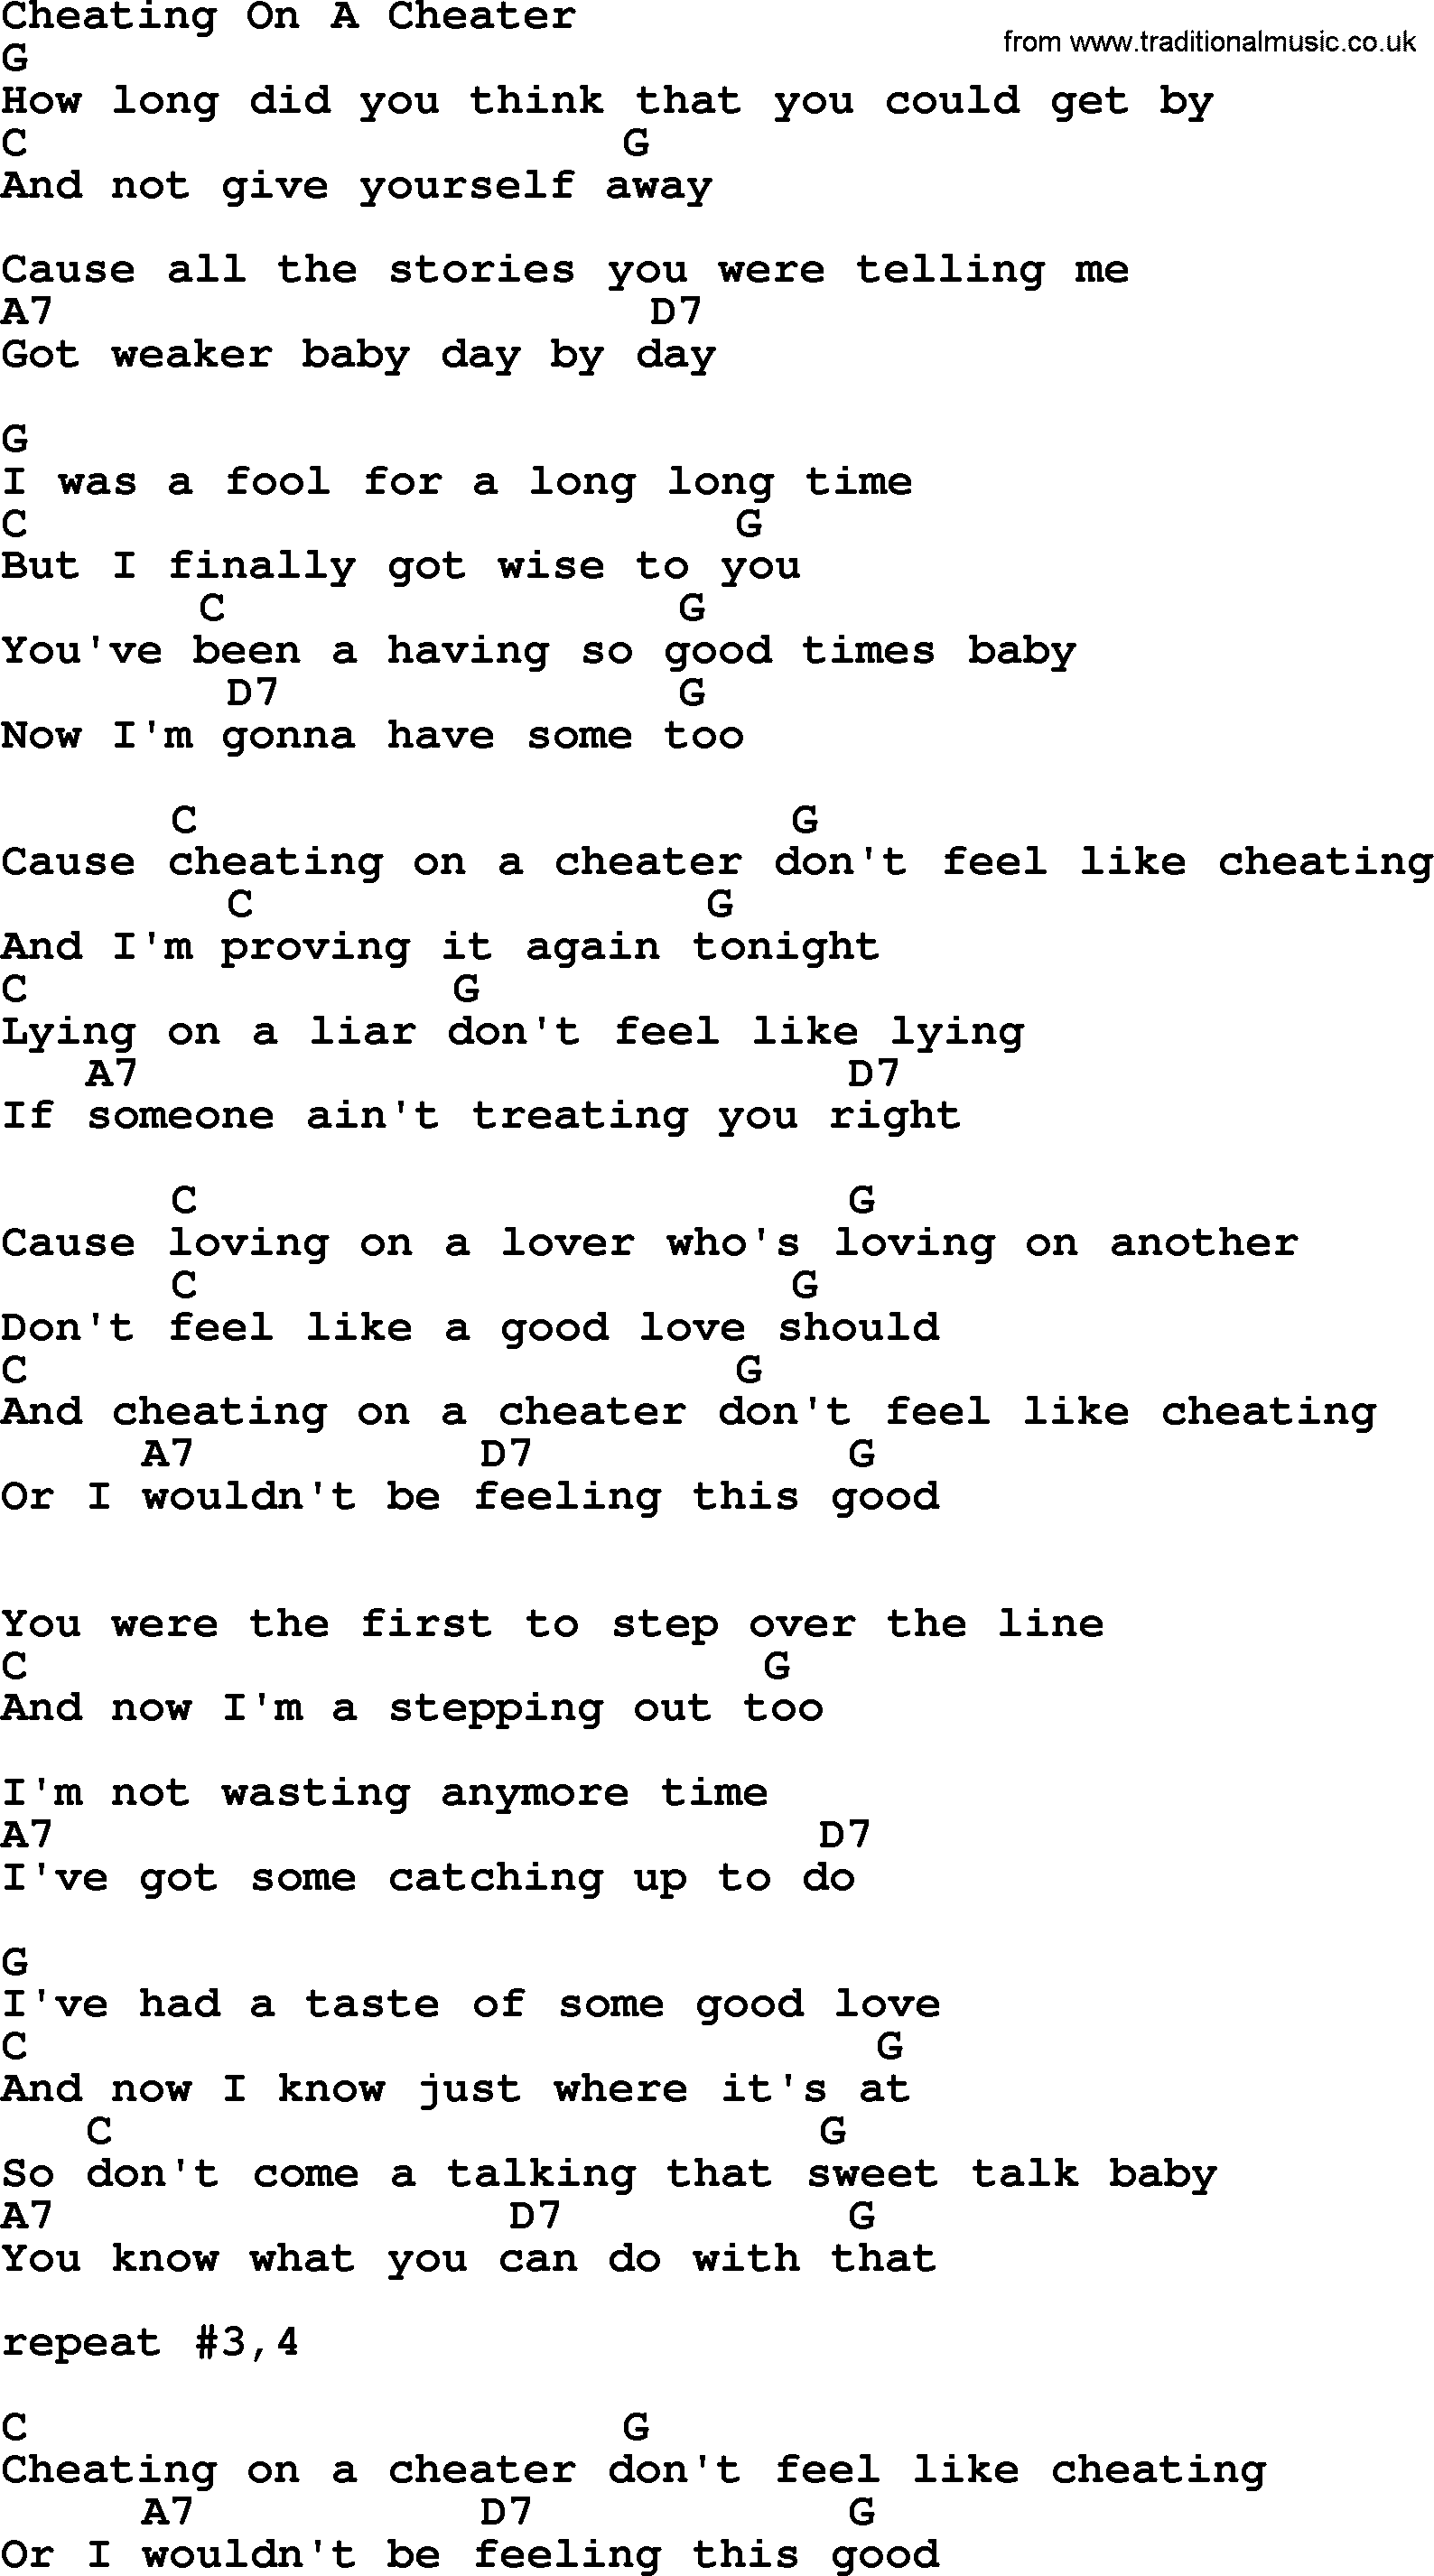 Loretta Lynn song: Cheating On A Cheater lyrics and chords